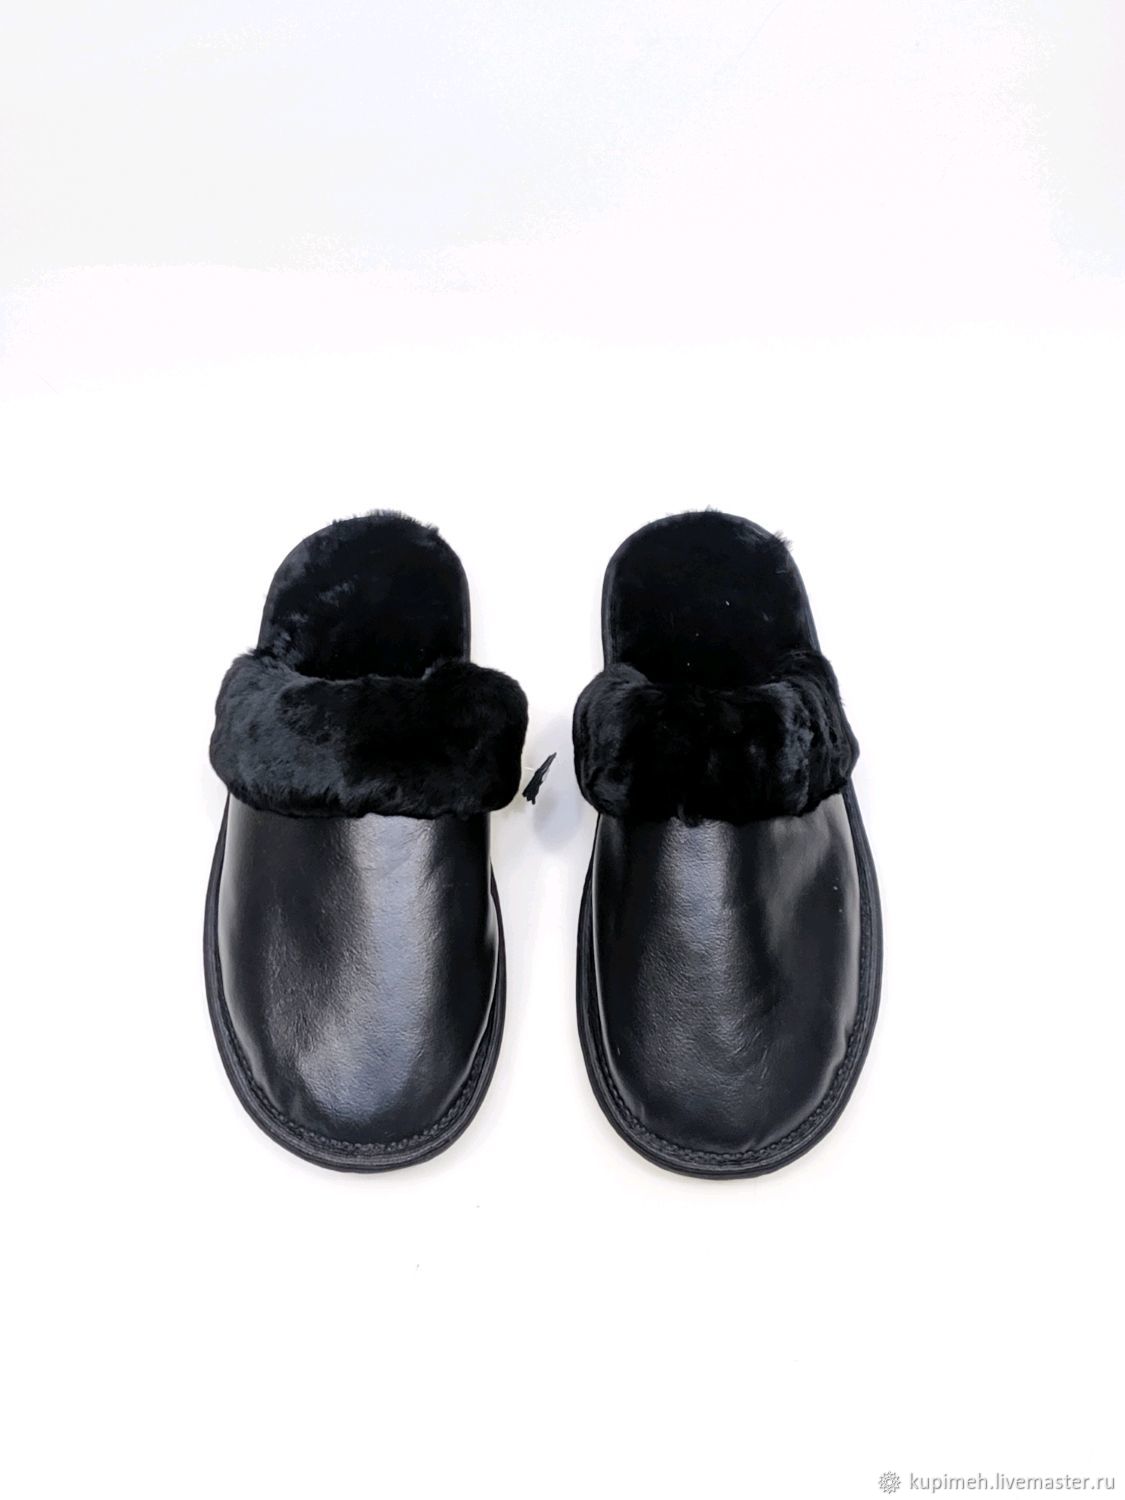 Men's Slippers made of genuine leather (PREMIUM ), Slippers, Nalchik,  Фото №1